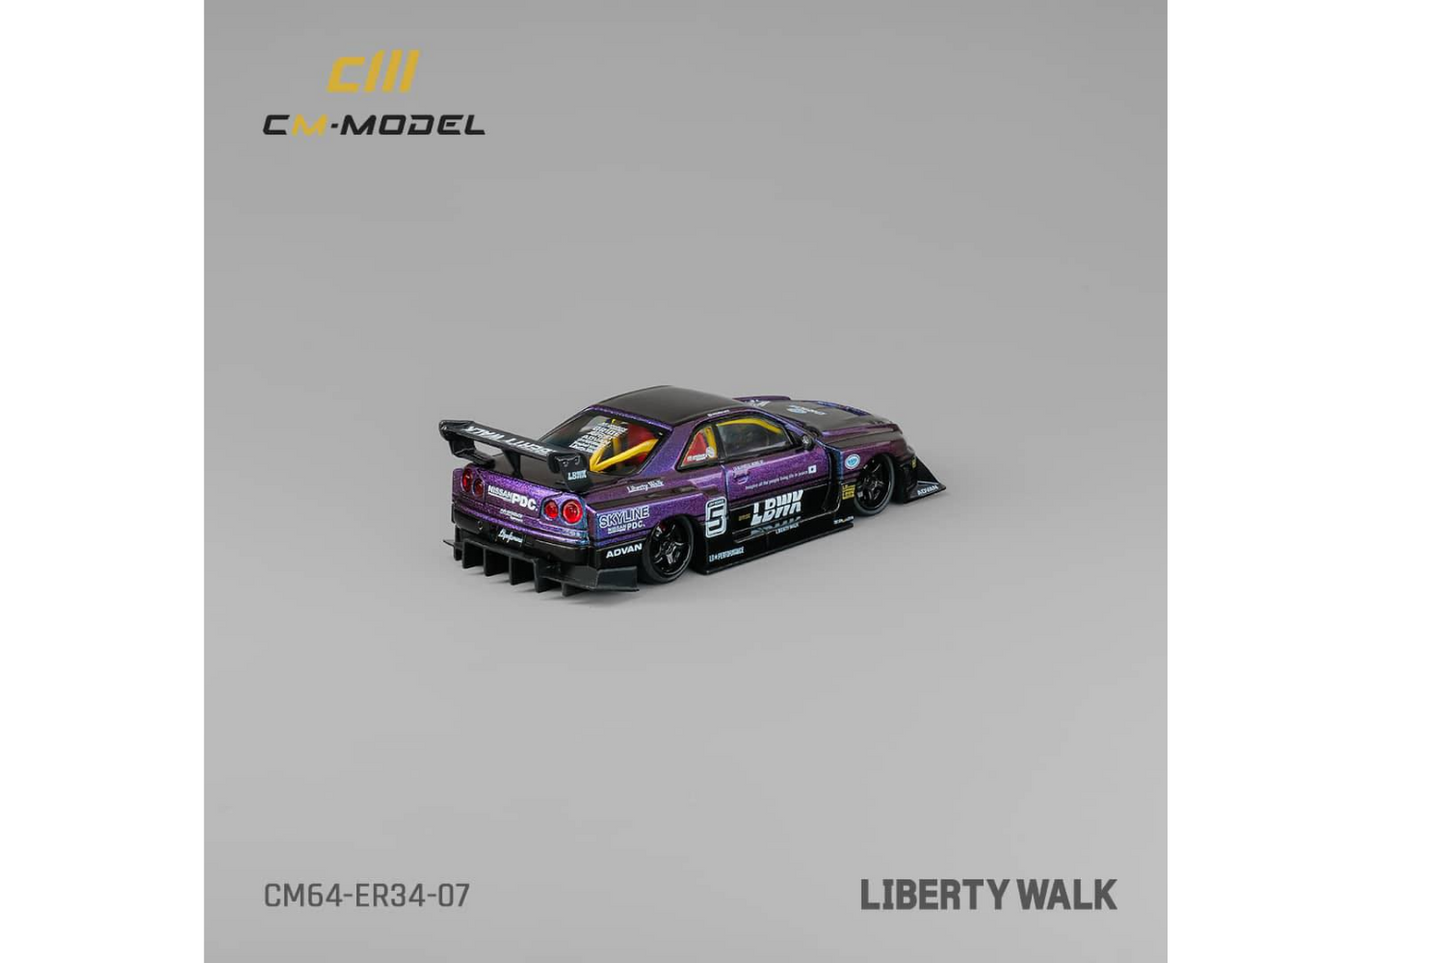 CM Model 1/64 Liberty Walk Nissan Skyline ER34 Super Silhouette #5 LBWK in Chameleon